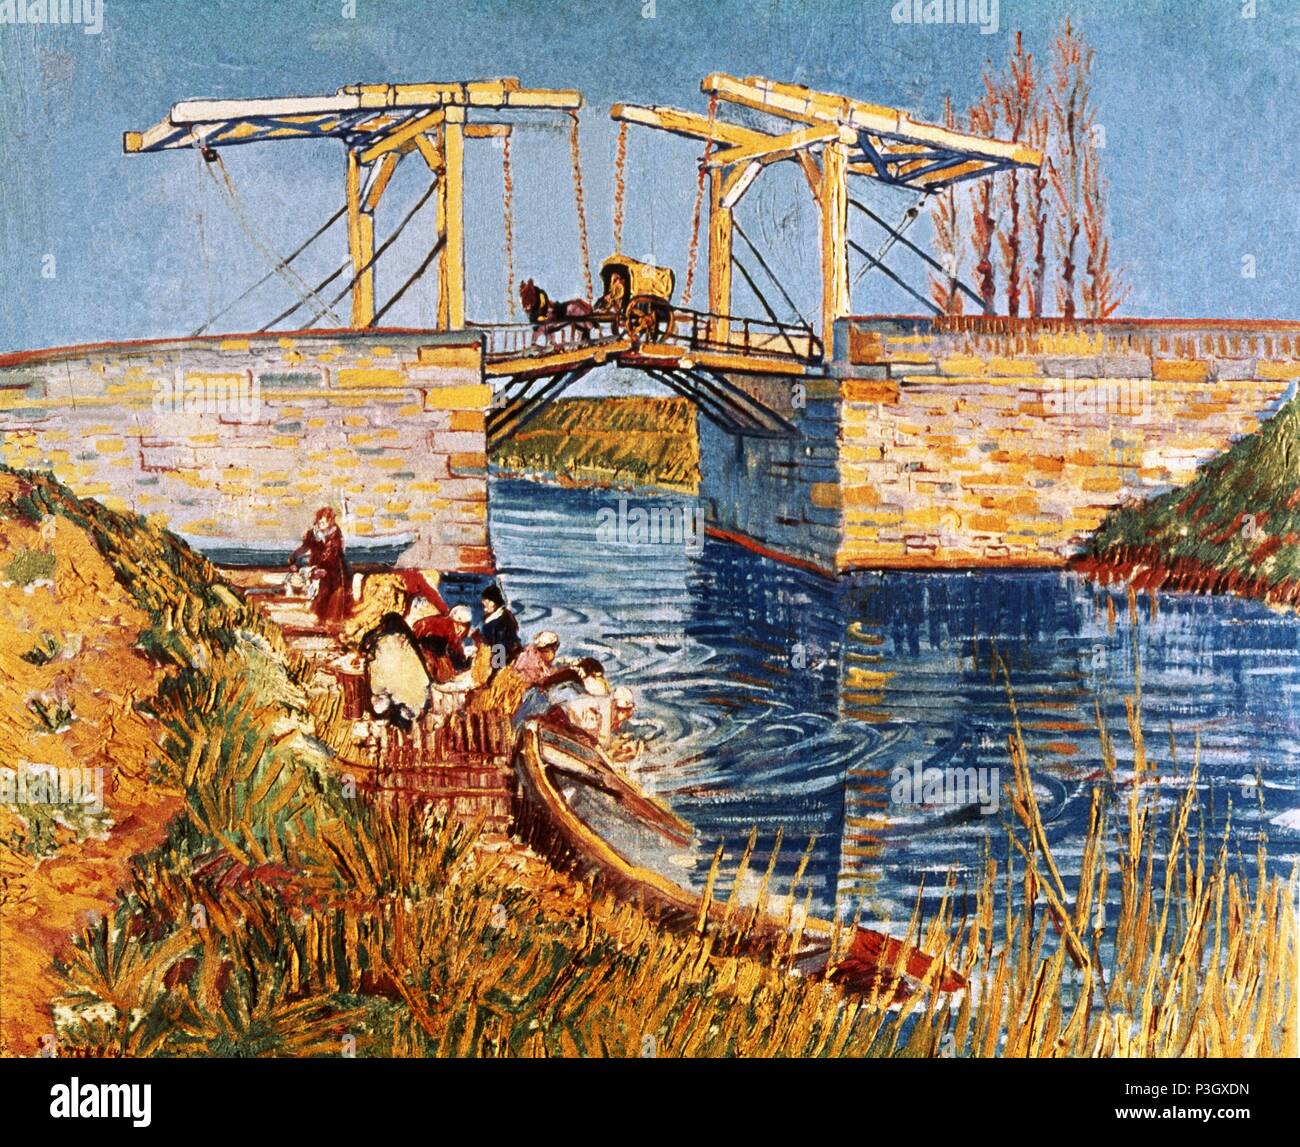 Dutch school. The Langlois Bridge in Arles. 1888. Oil on canvas (54 x 65 cm). Otterlo, Rijksmuseum Kröller-Müller. Author: Vincent van Gogh (1853-1890). Location: MUSEO KROLLER-MULLER, OTTERLO, HOLANDA. Stock Photo